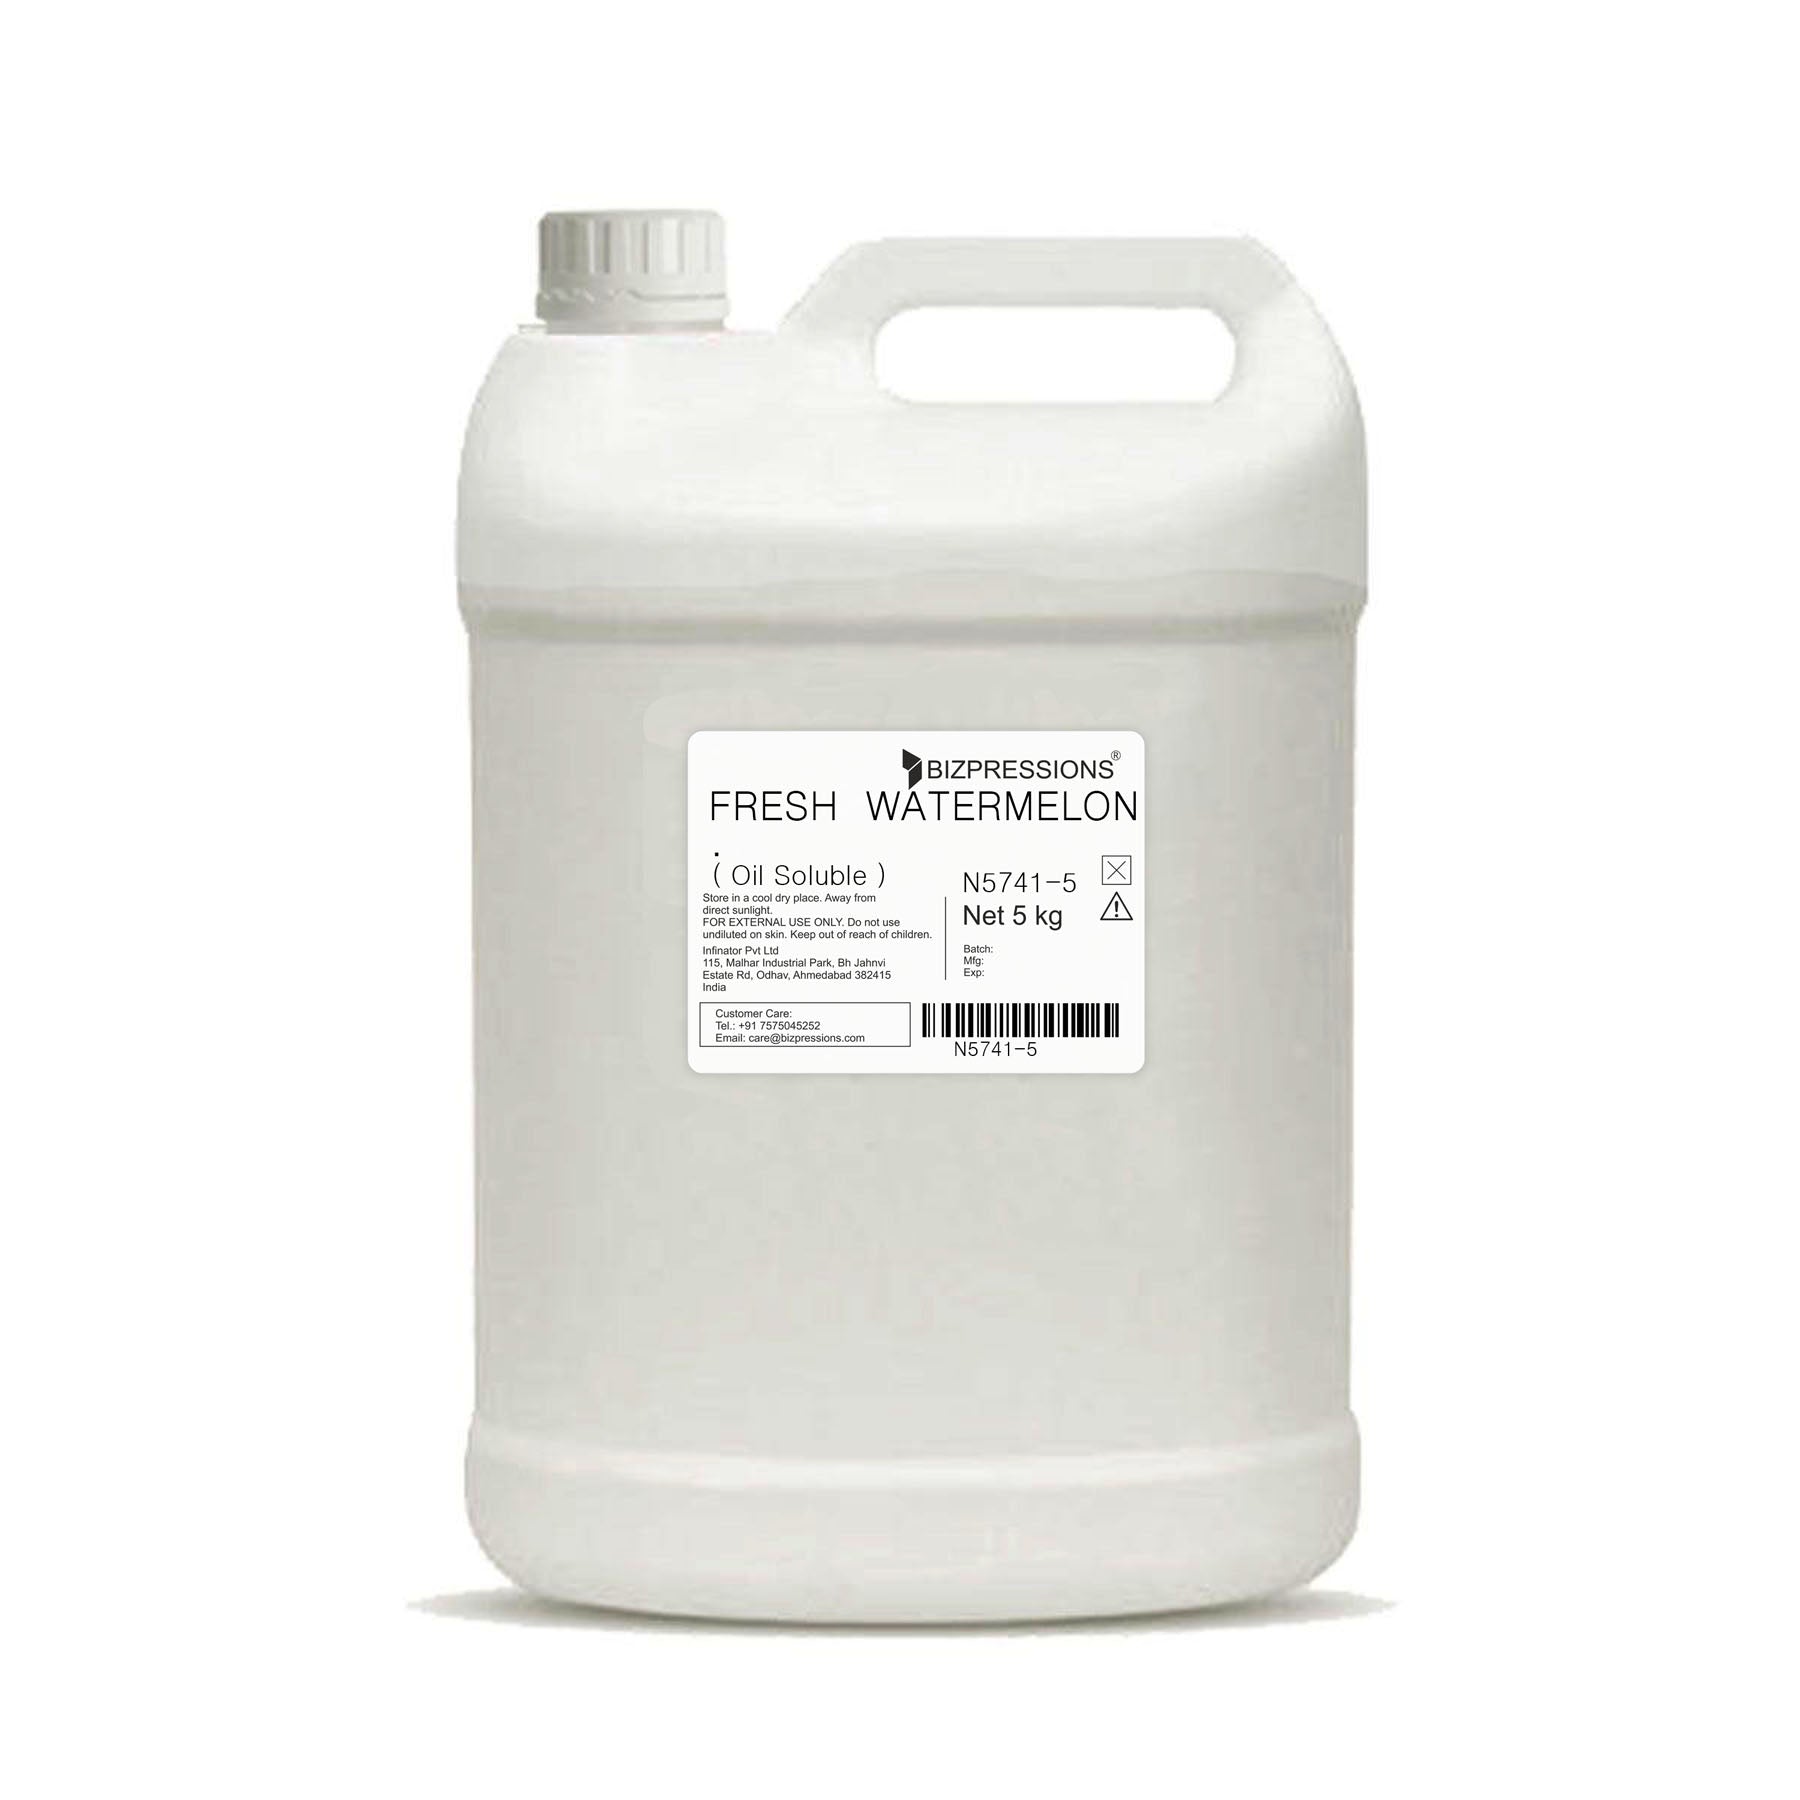 FRESH WATERMELON - Fragrance ( Oil Soluble ) - 5 kg